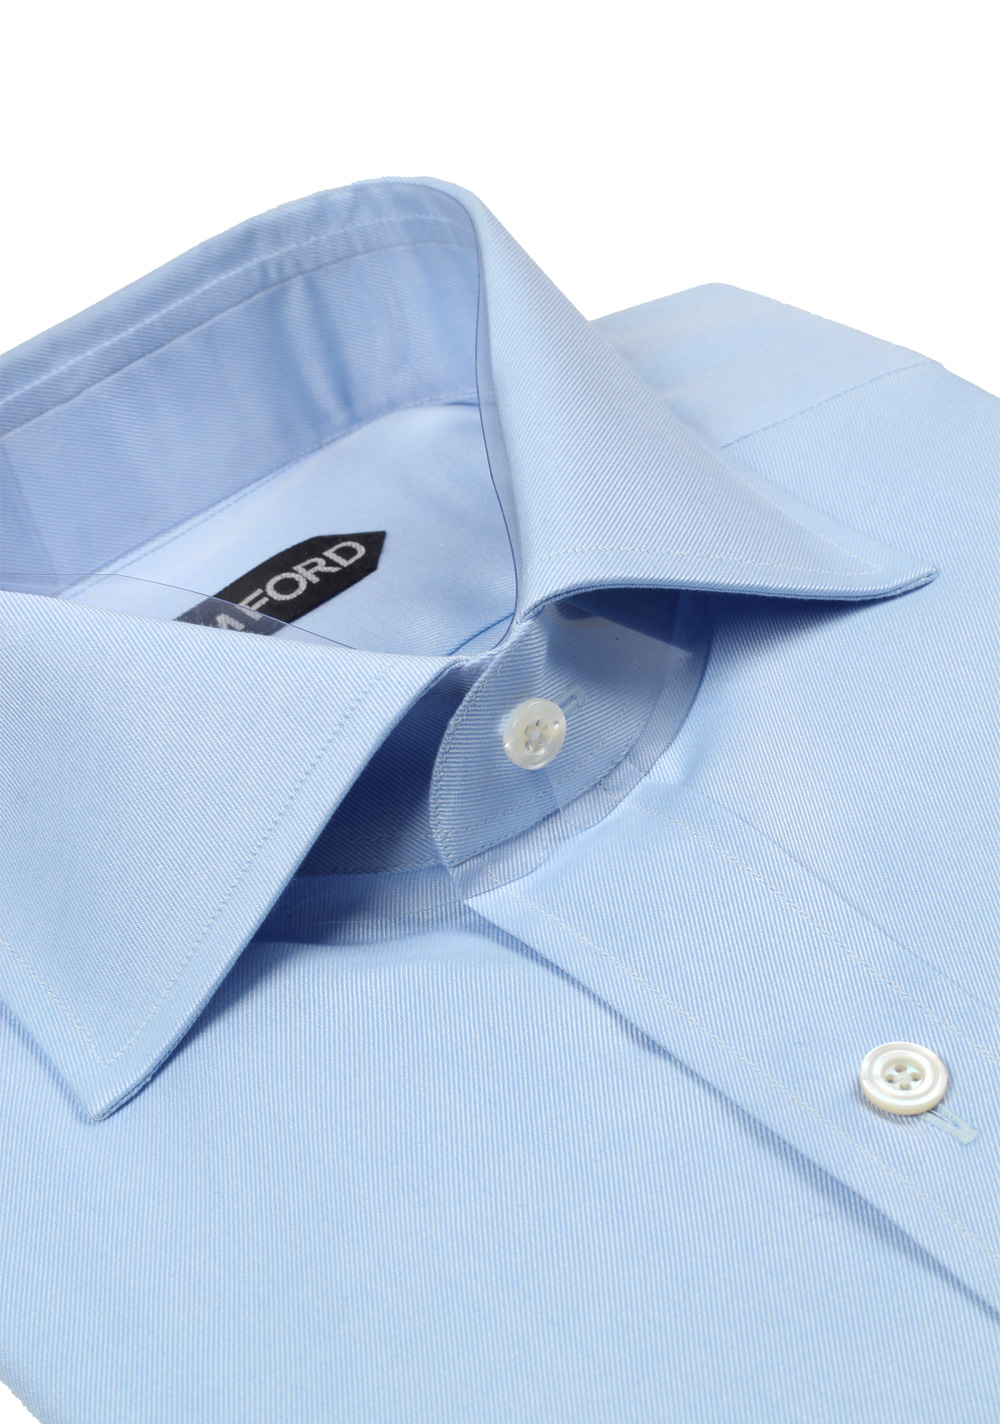 TOM FORD Solid Blue Shirt Size 39 / 15,5 U.S. | Costume Limité